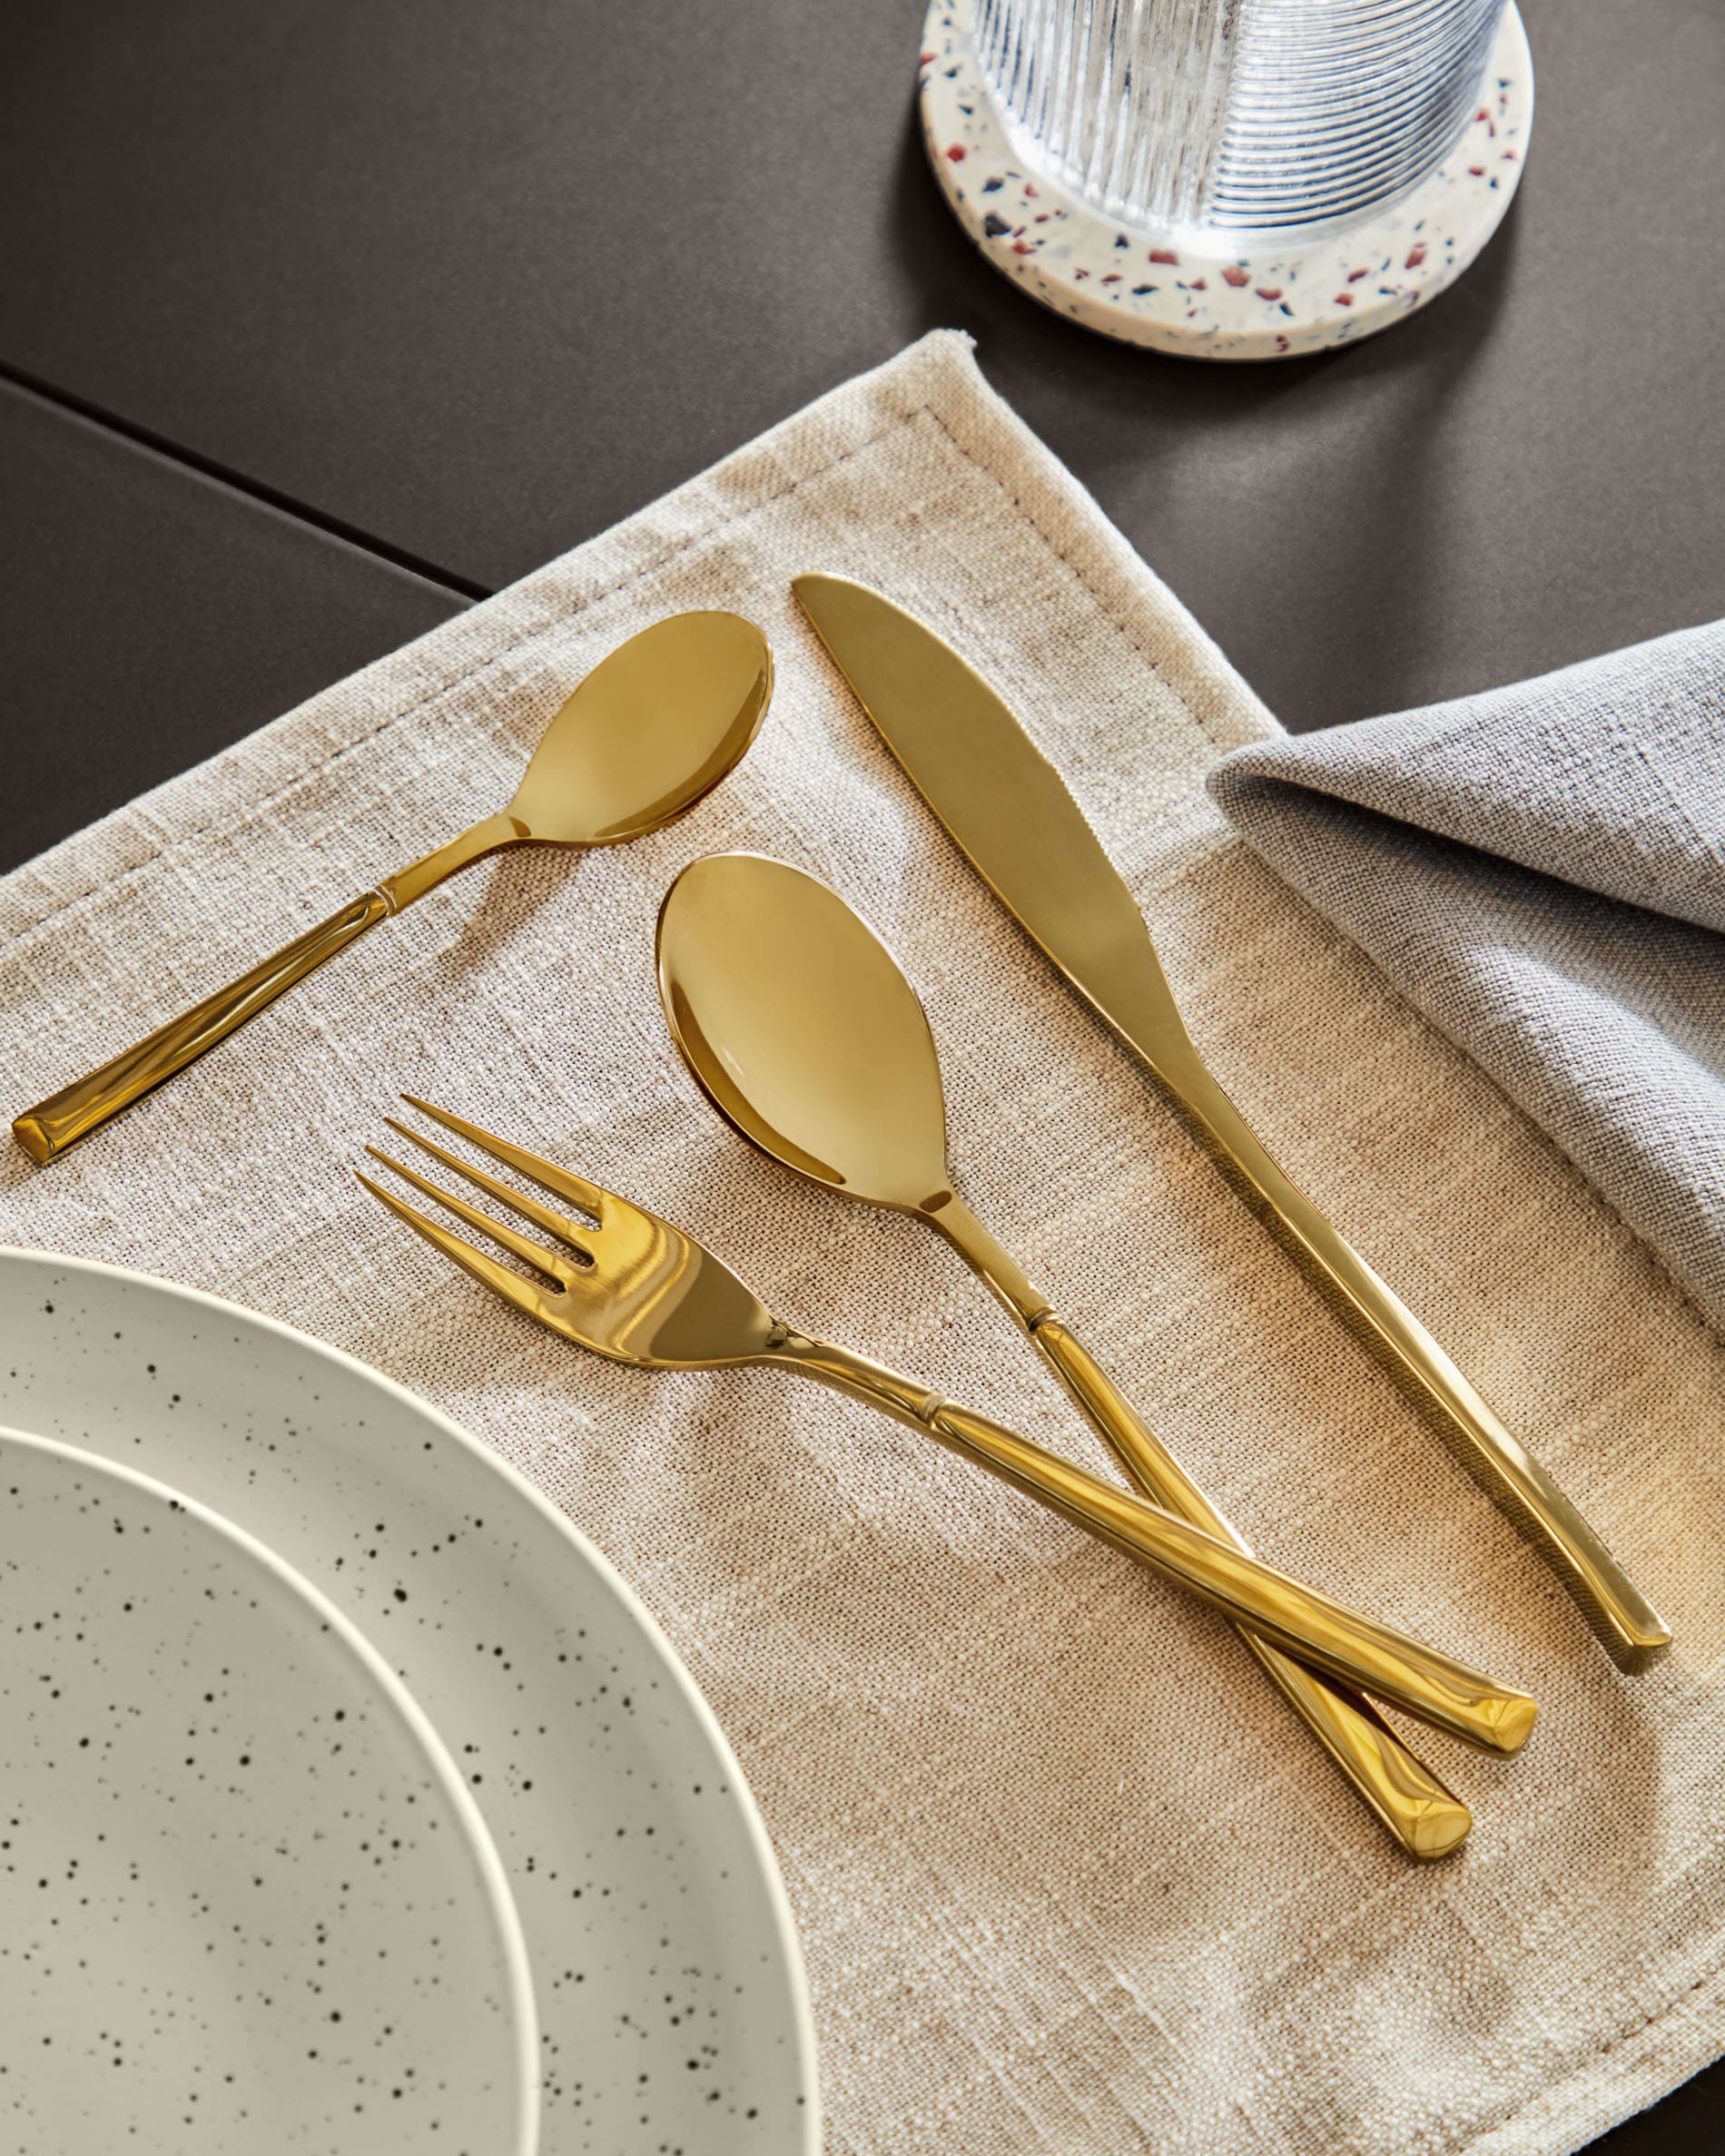 Lite square handle 16-piece golden cutlery set